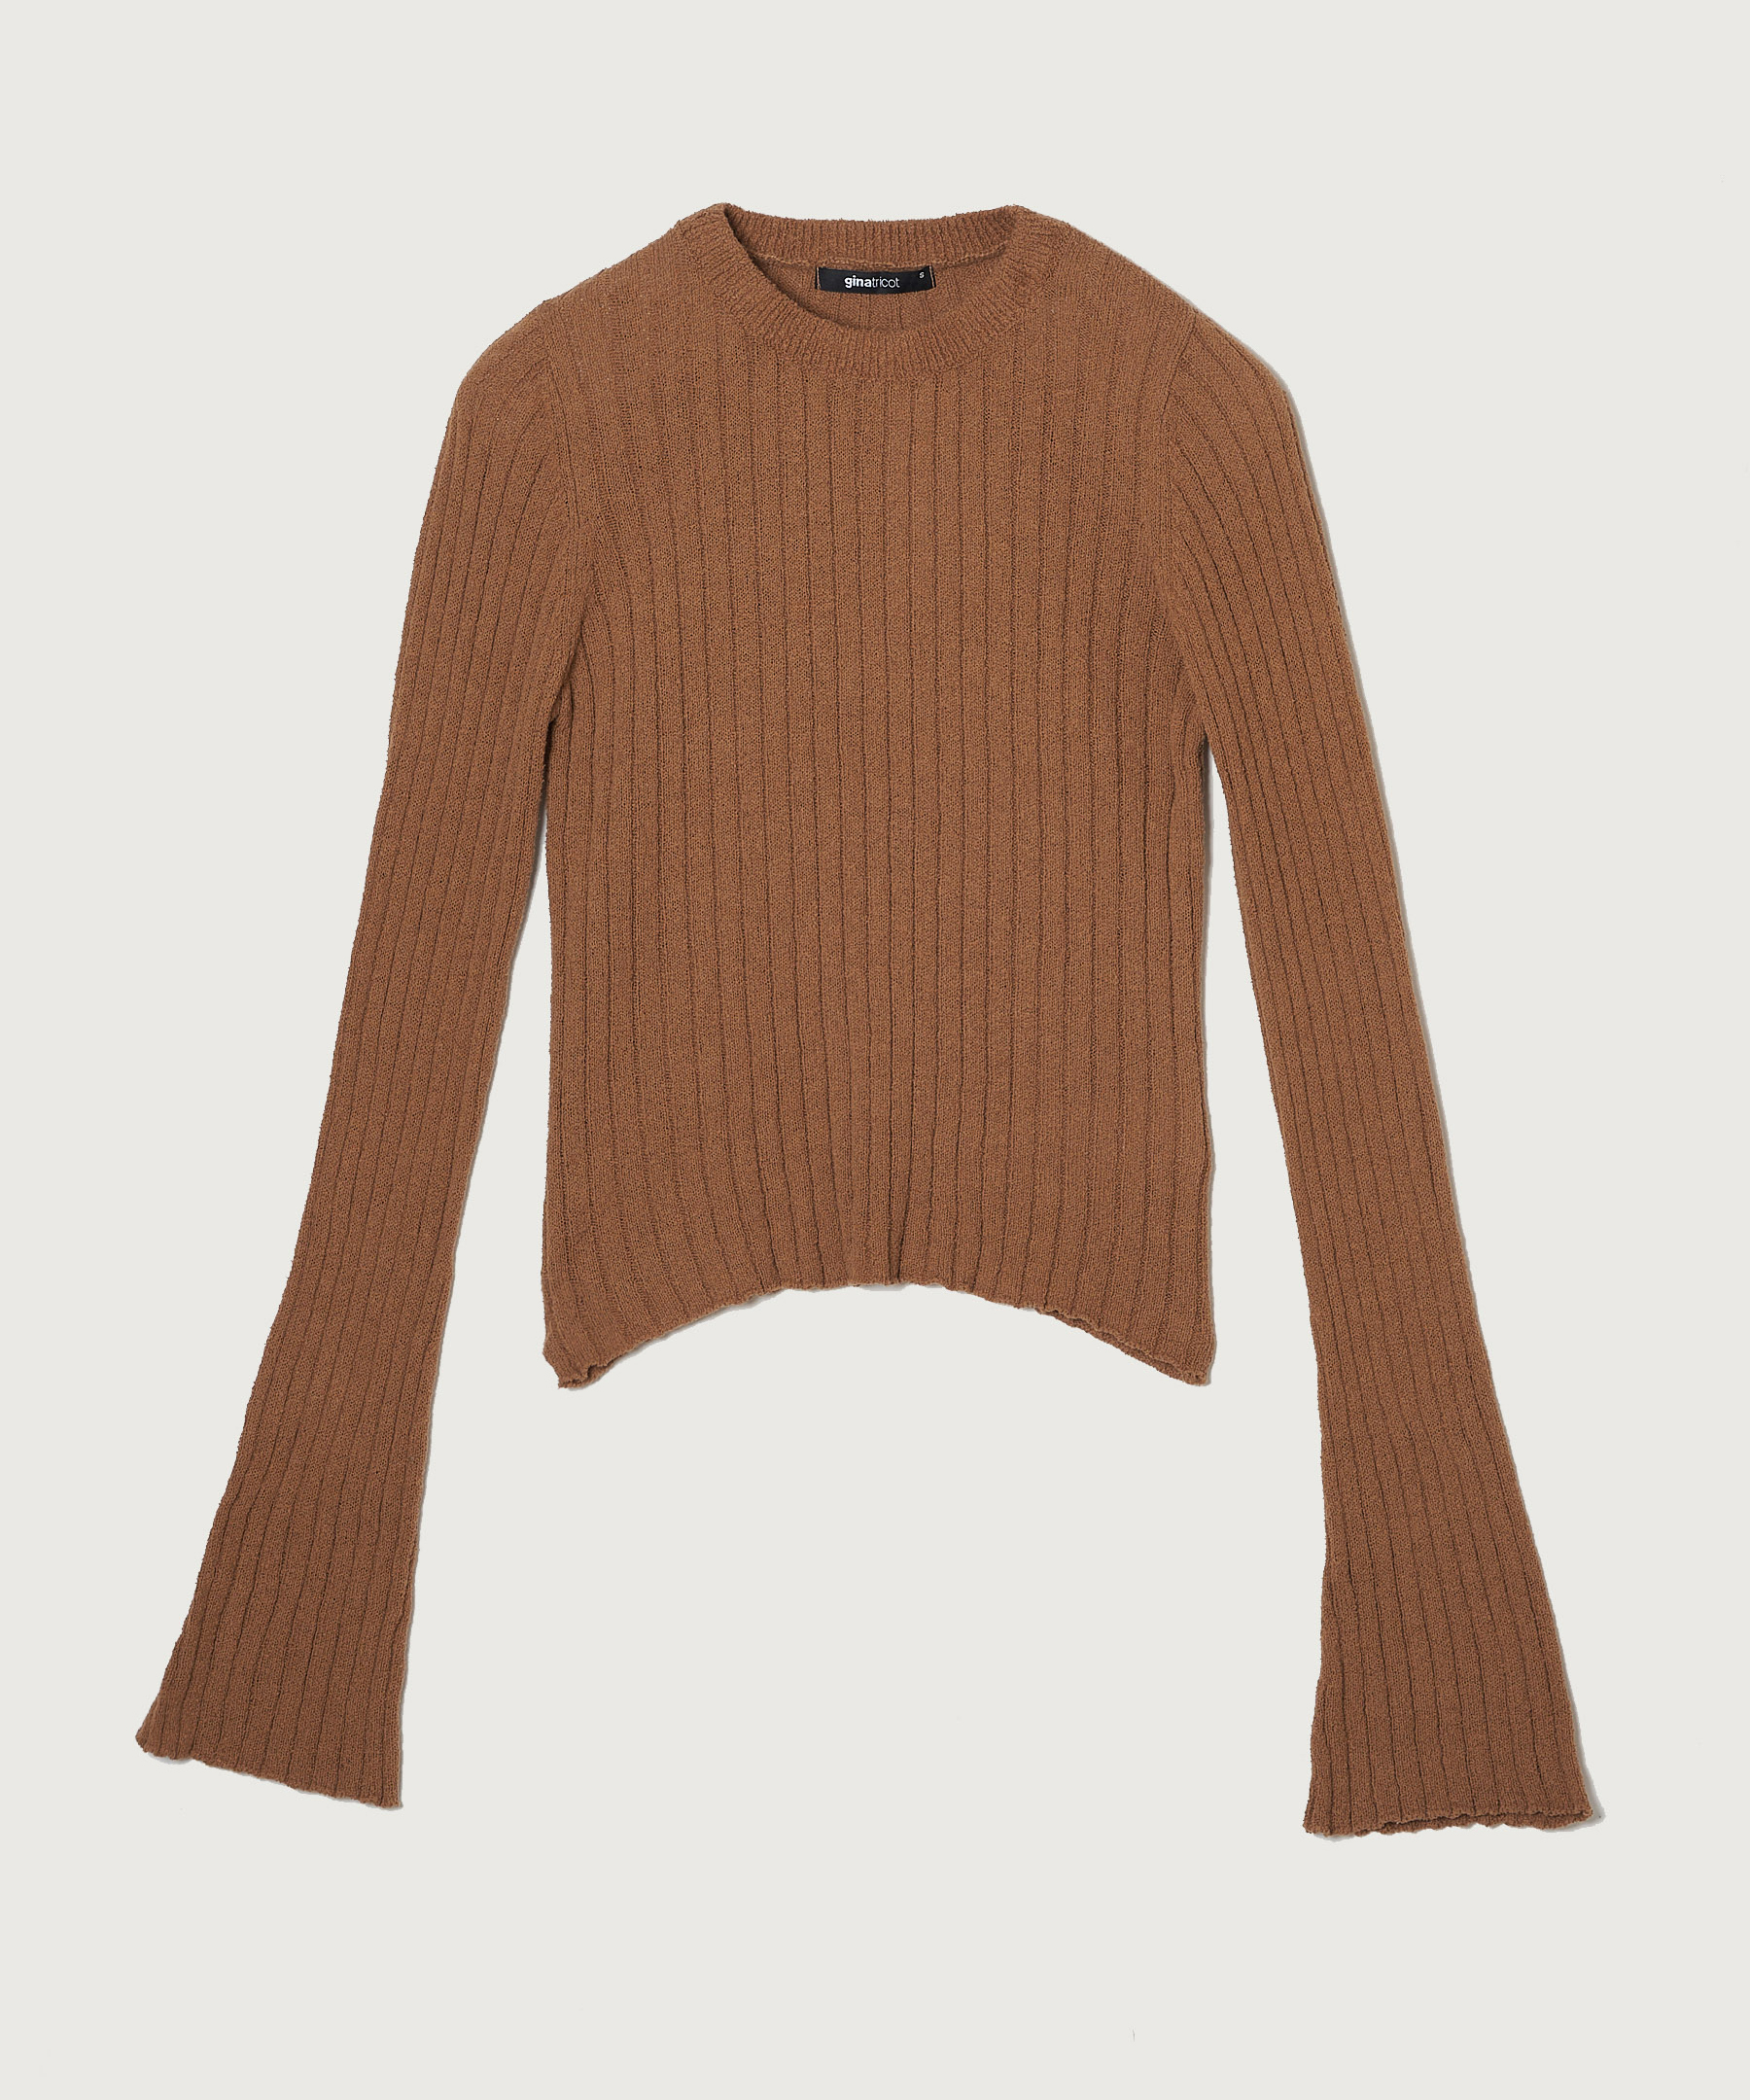 Longsleeve knitted top